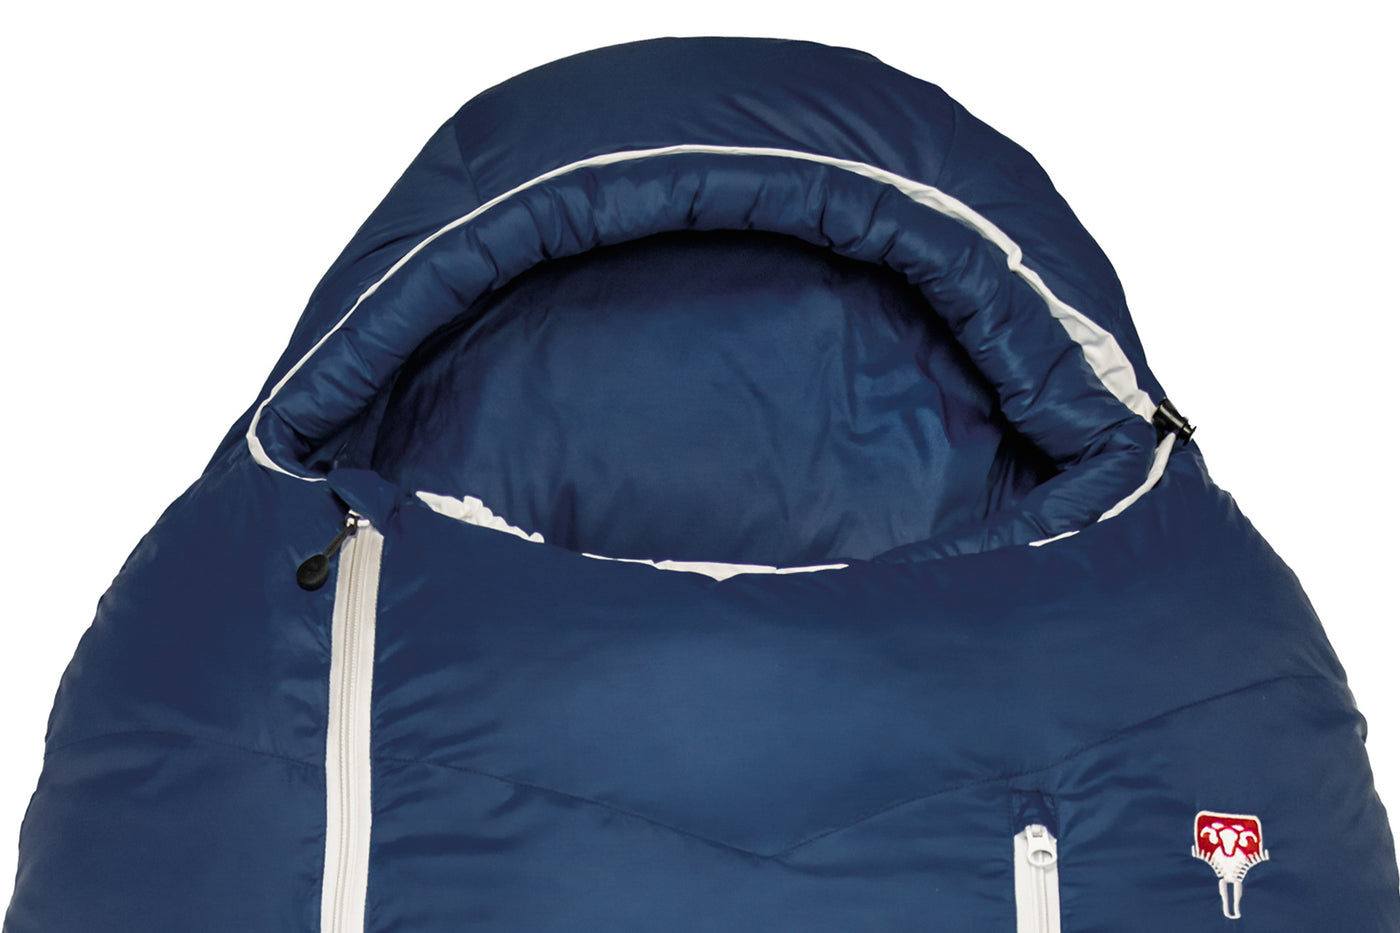 Grüezi bag Outdoorschlafsack Biopod DownWool Ice 200 - anpassbare Kapuze